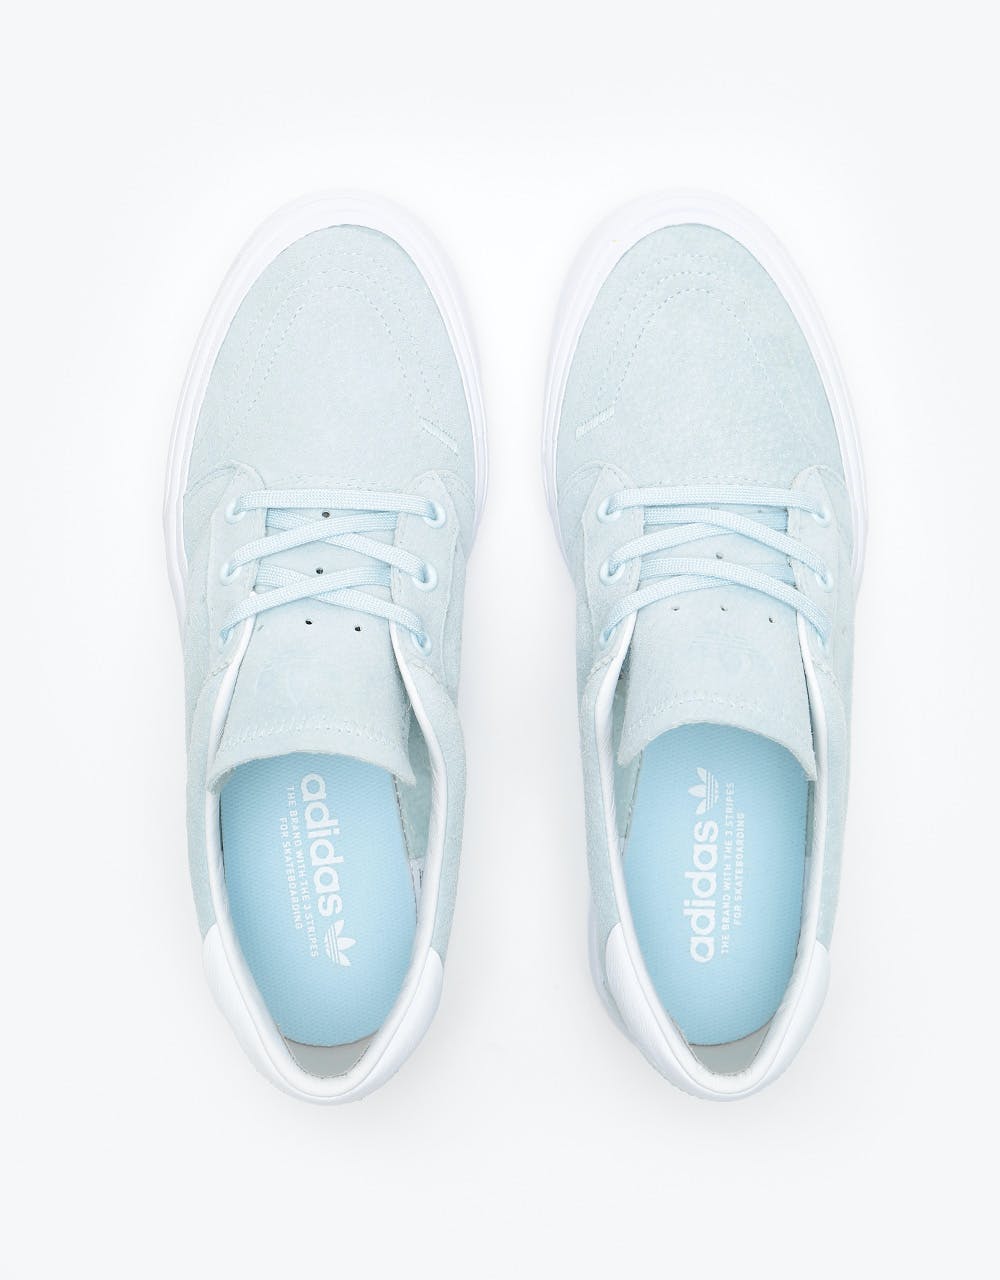 Adidas Coronado Skate Shoes - Sky Tint/Sky Tint/White